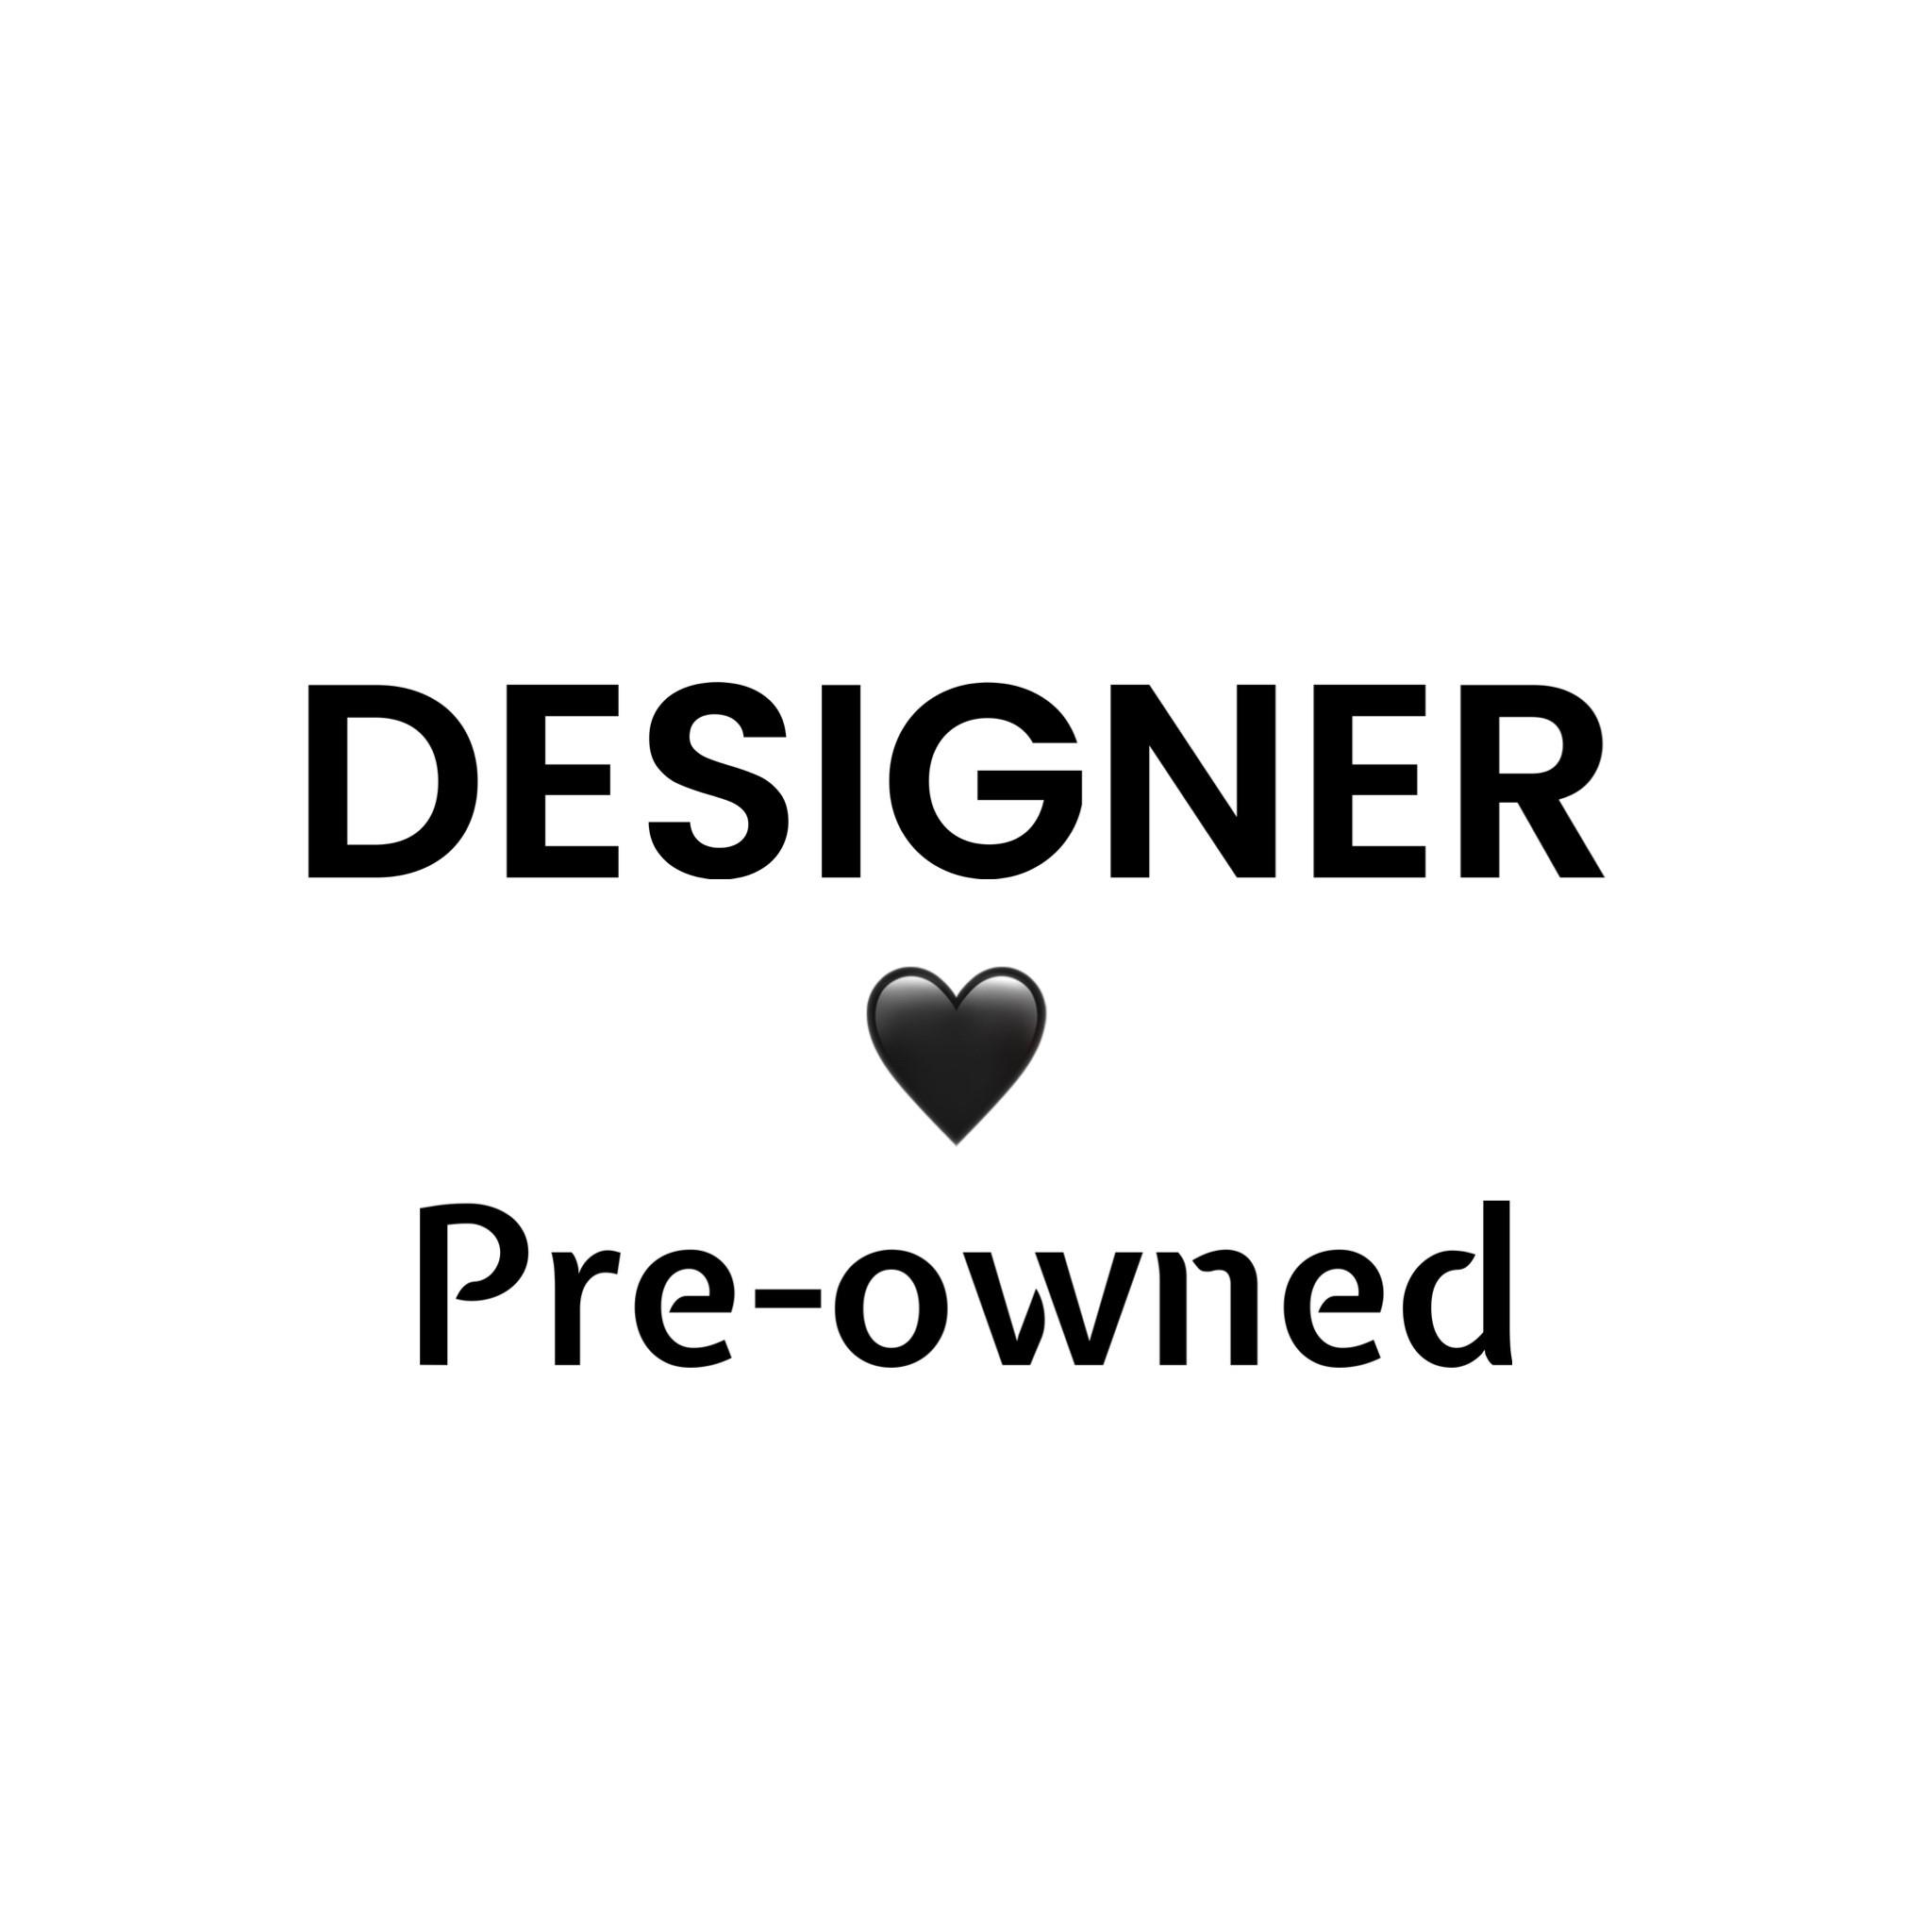 Designer Pre-owned